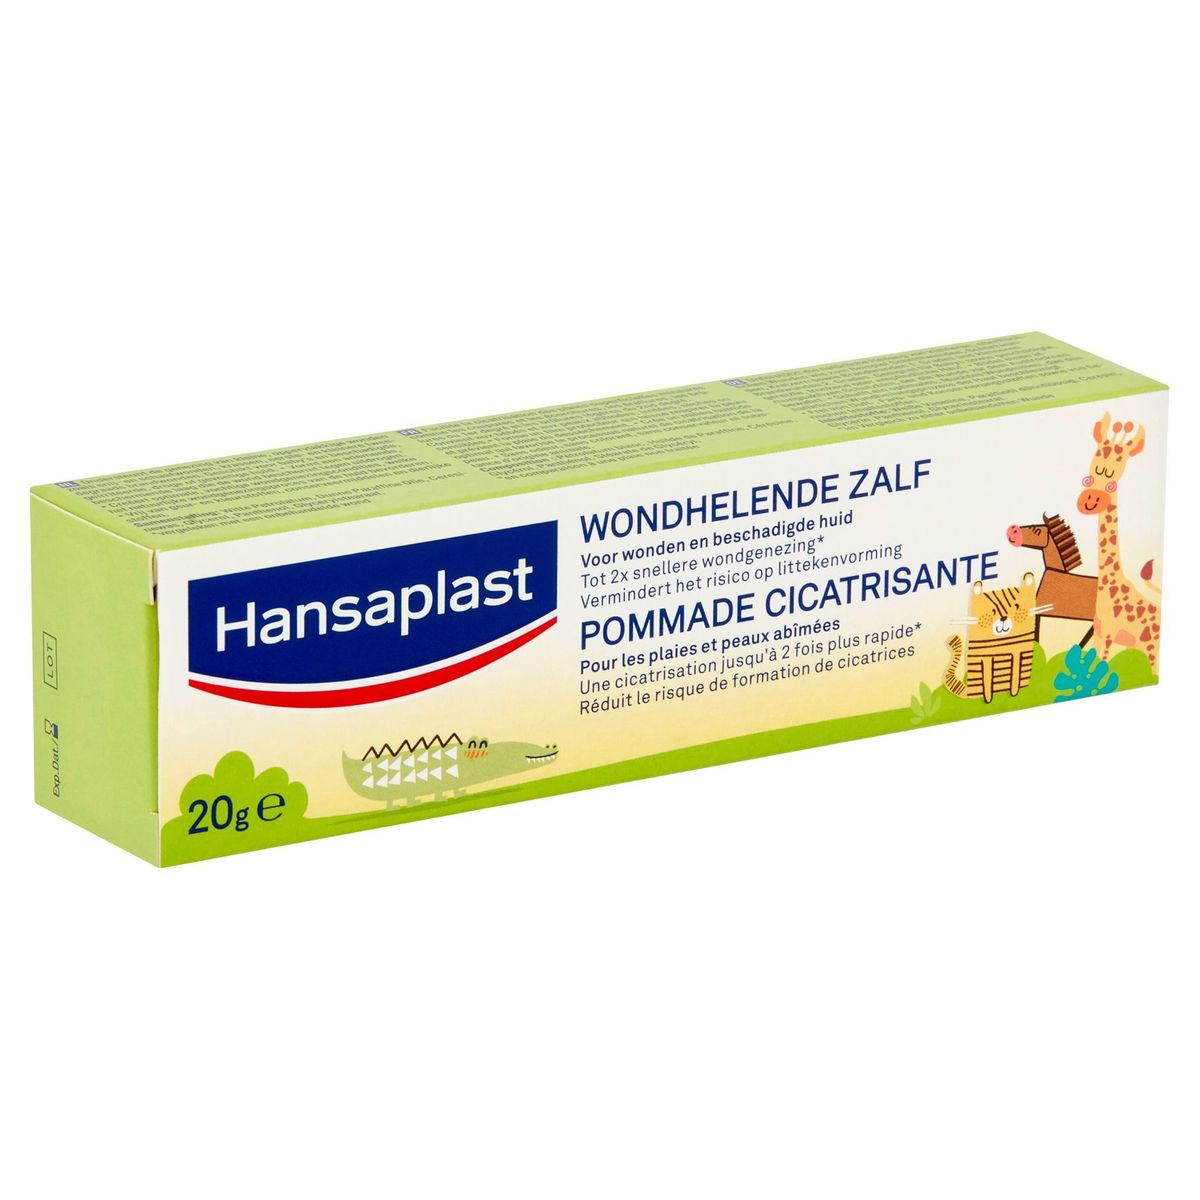 Hansaplast Wondhelende Zalf 20 | Carrefour